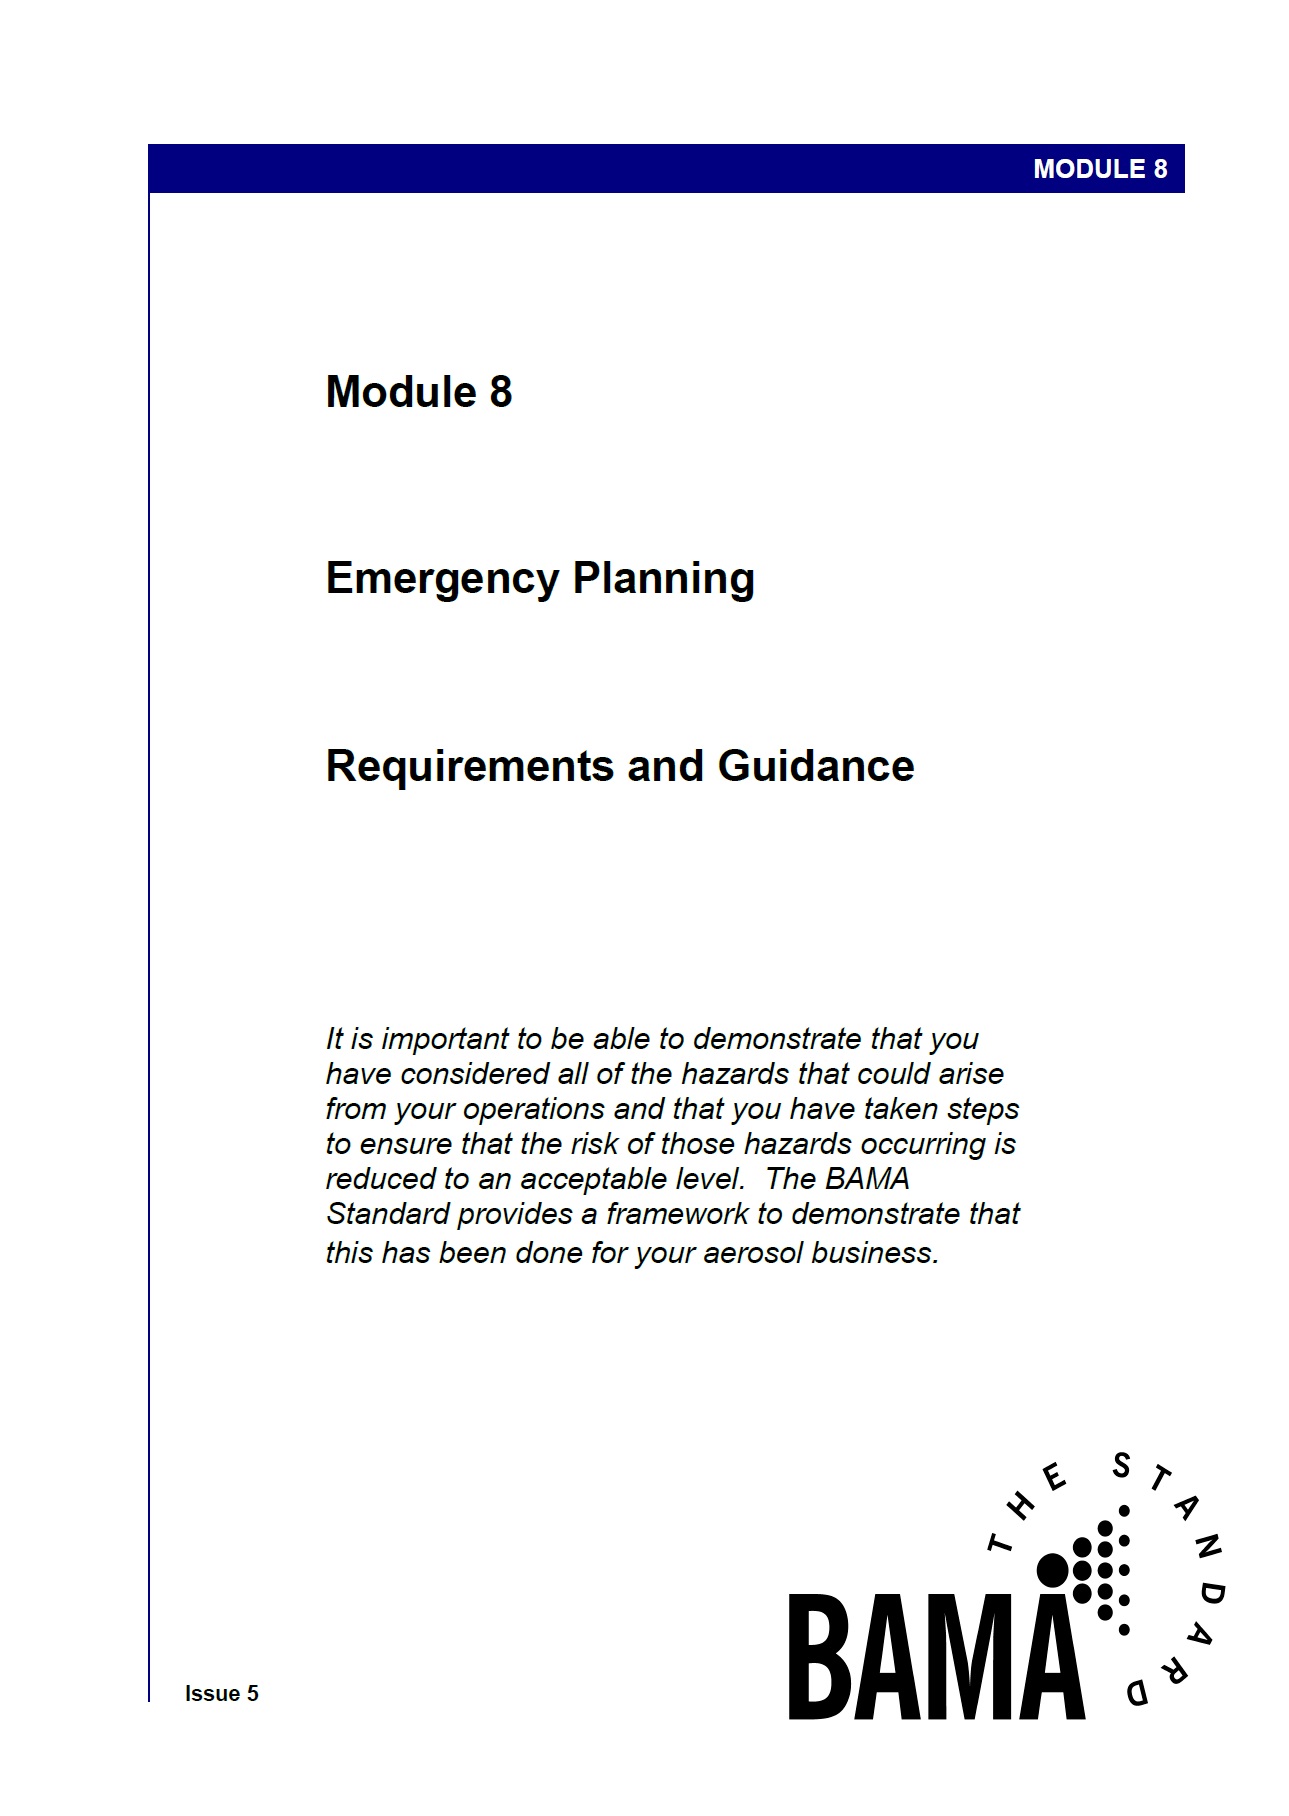 Module 8: Emergency Planning